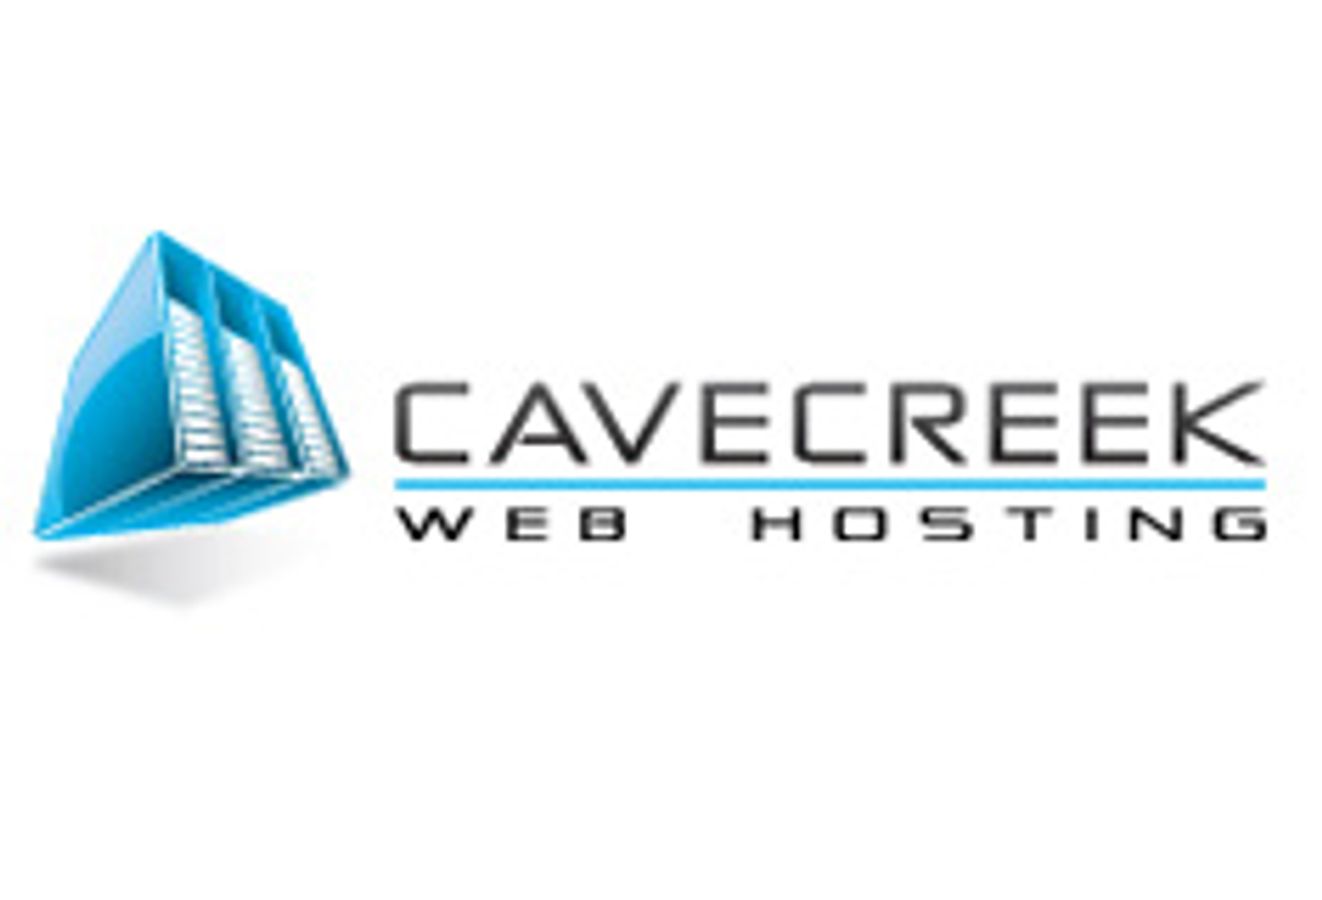 Cavecreek Web Hosting